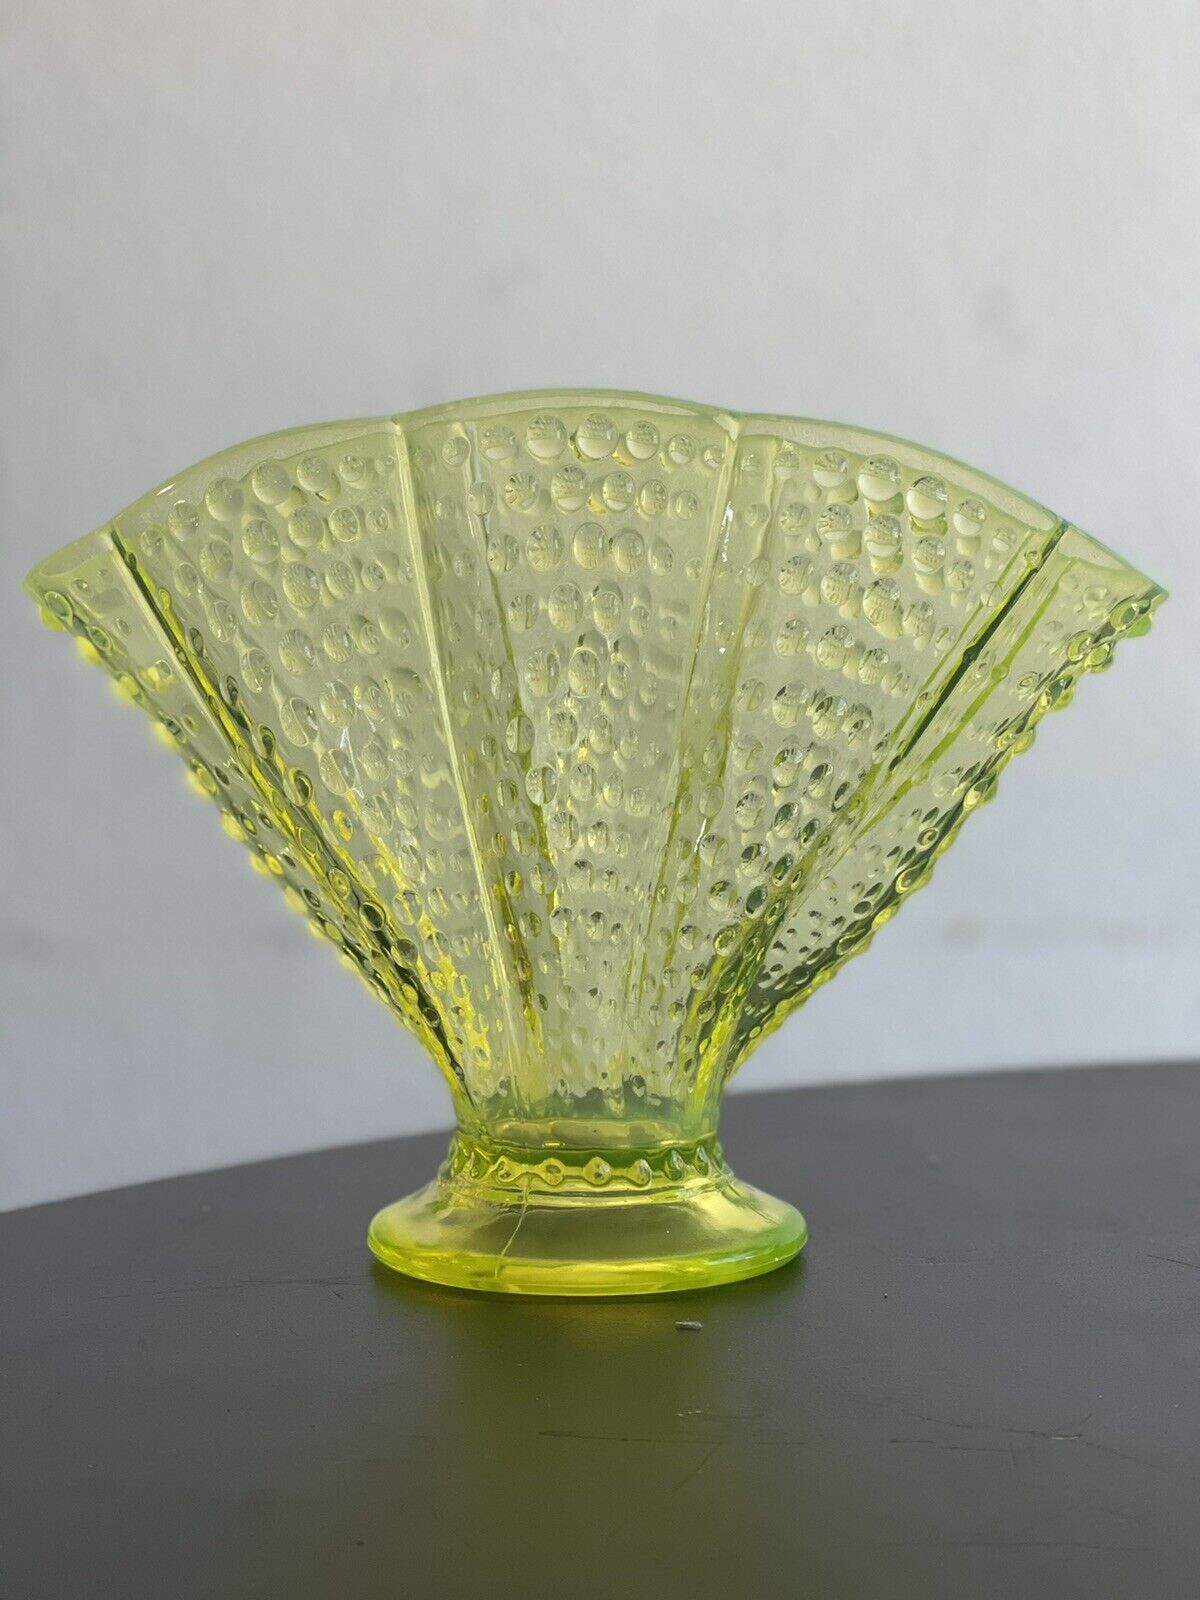 ANTIQUE AMERICAN VASELINE GLASS Fenton Hobnail FAN VASE Green Uranium Style